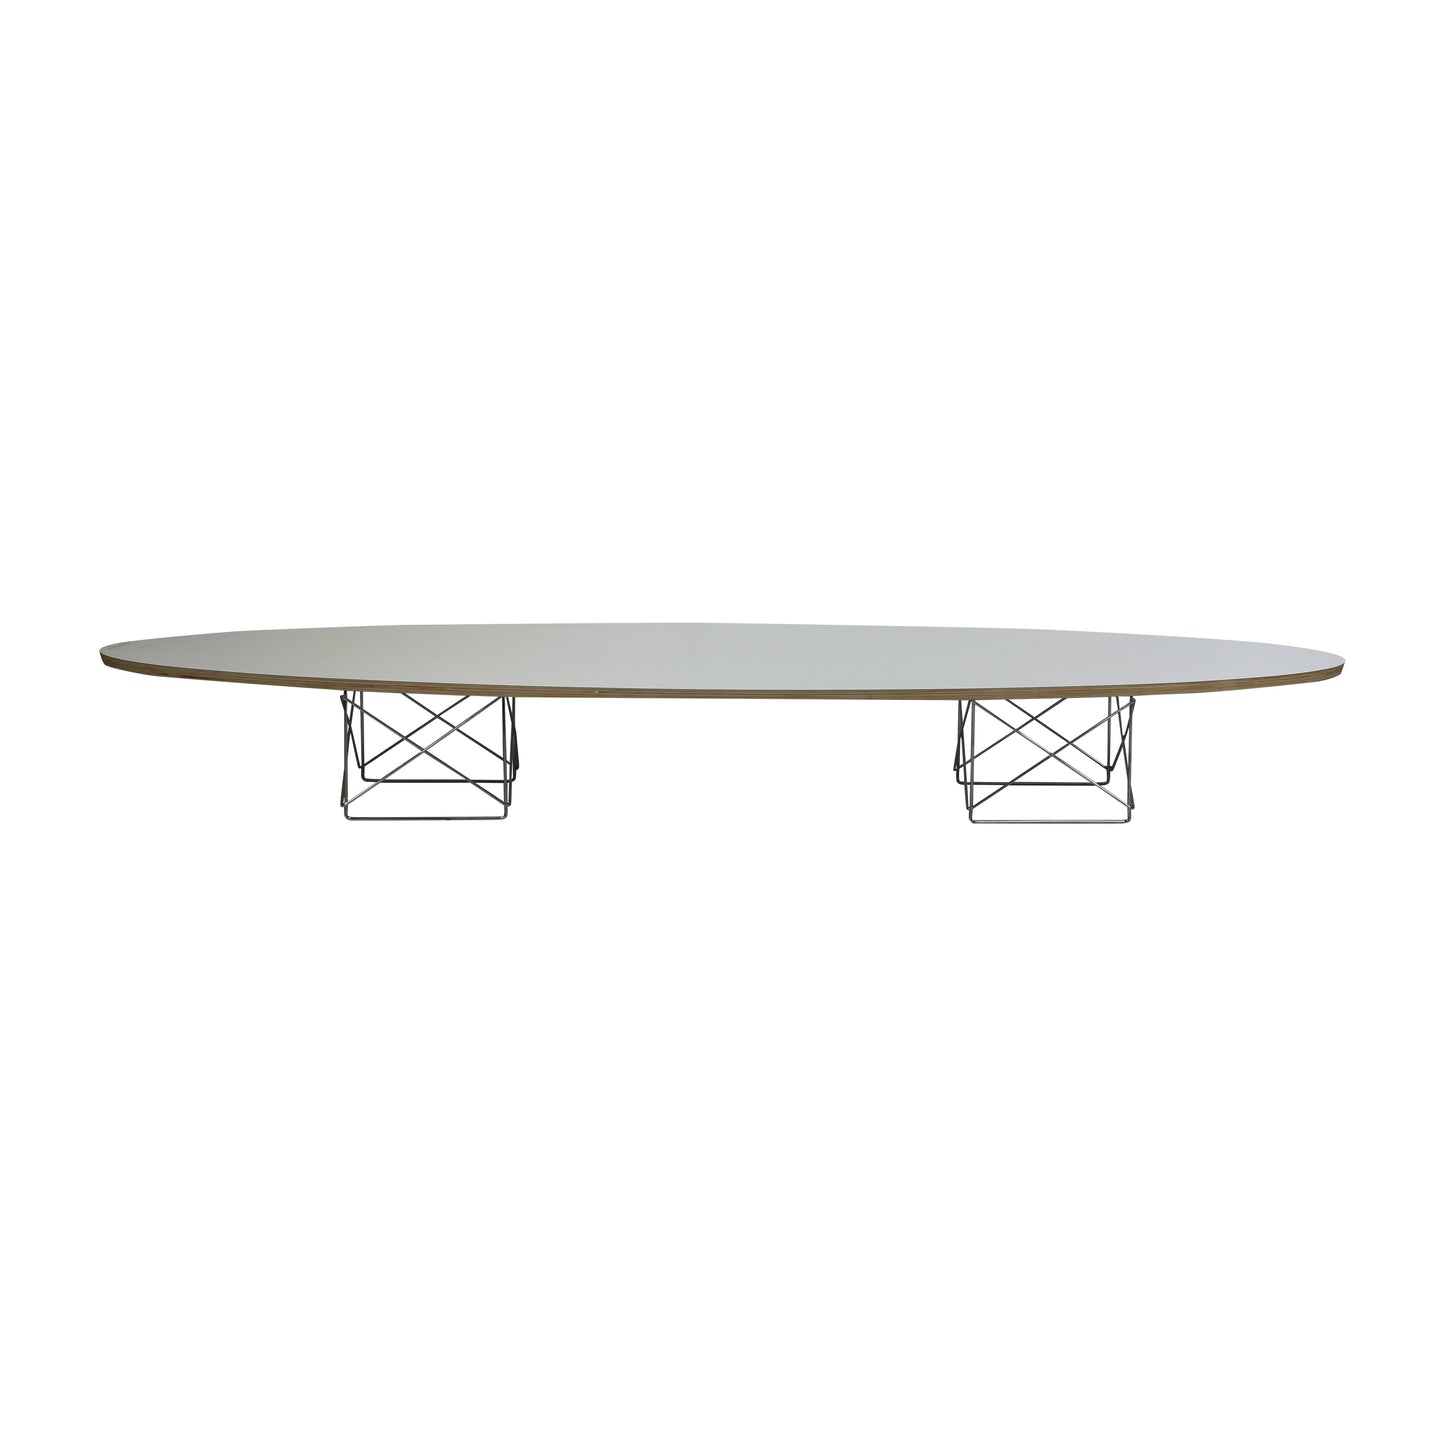 Eames style elliptical table